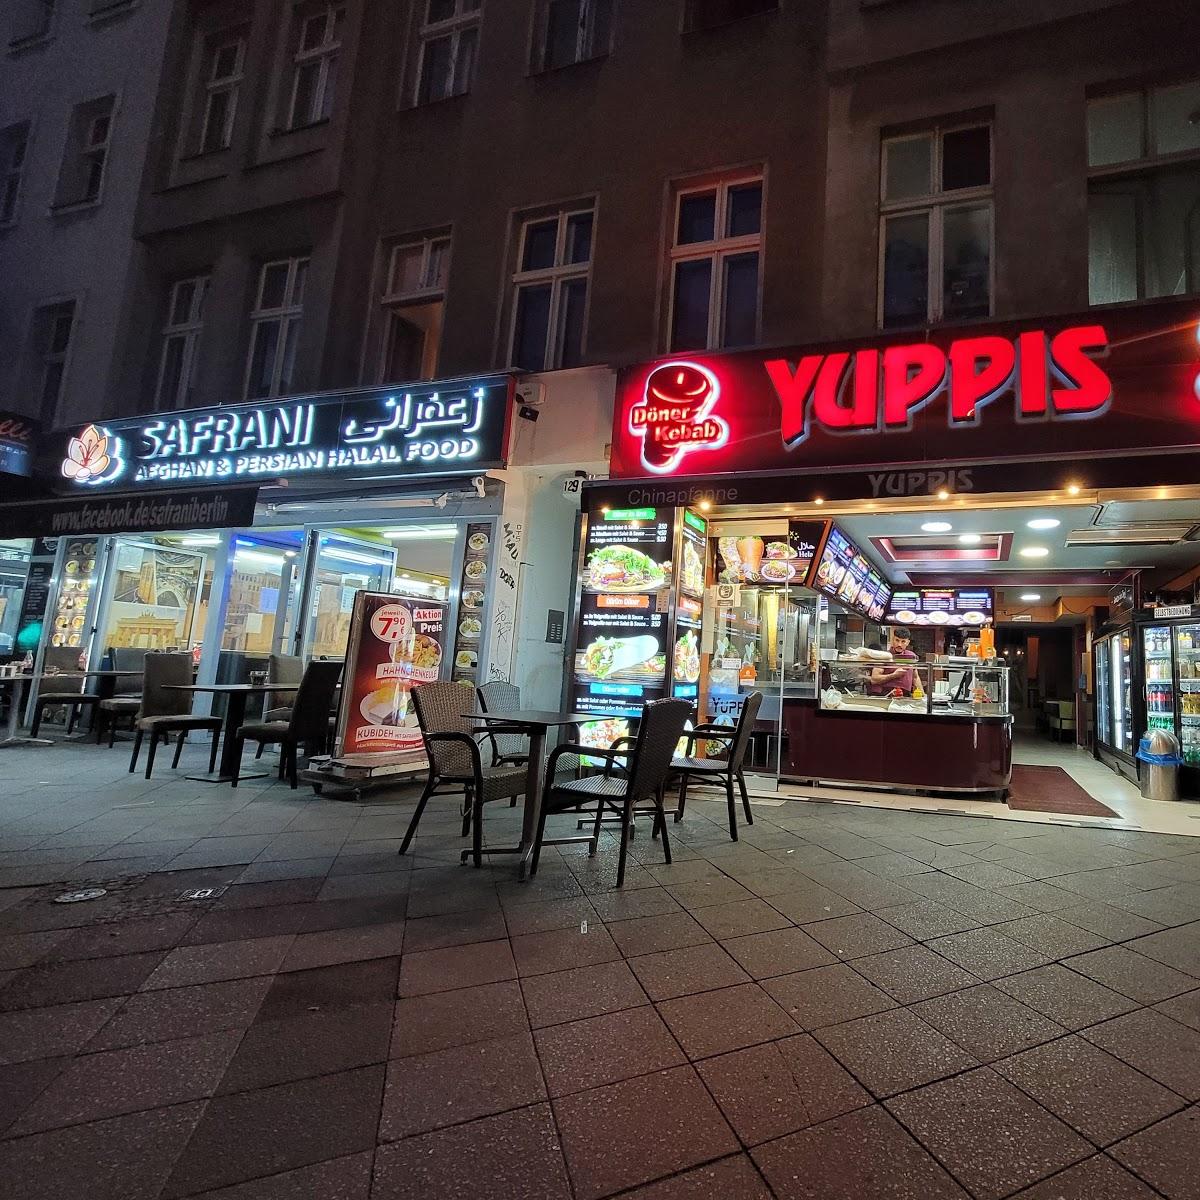 Restaurant "Yuppis Bistro" in Berlin